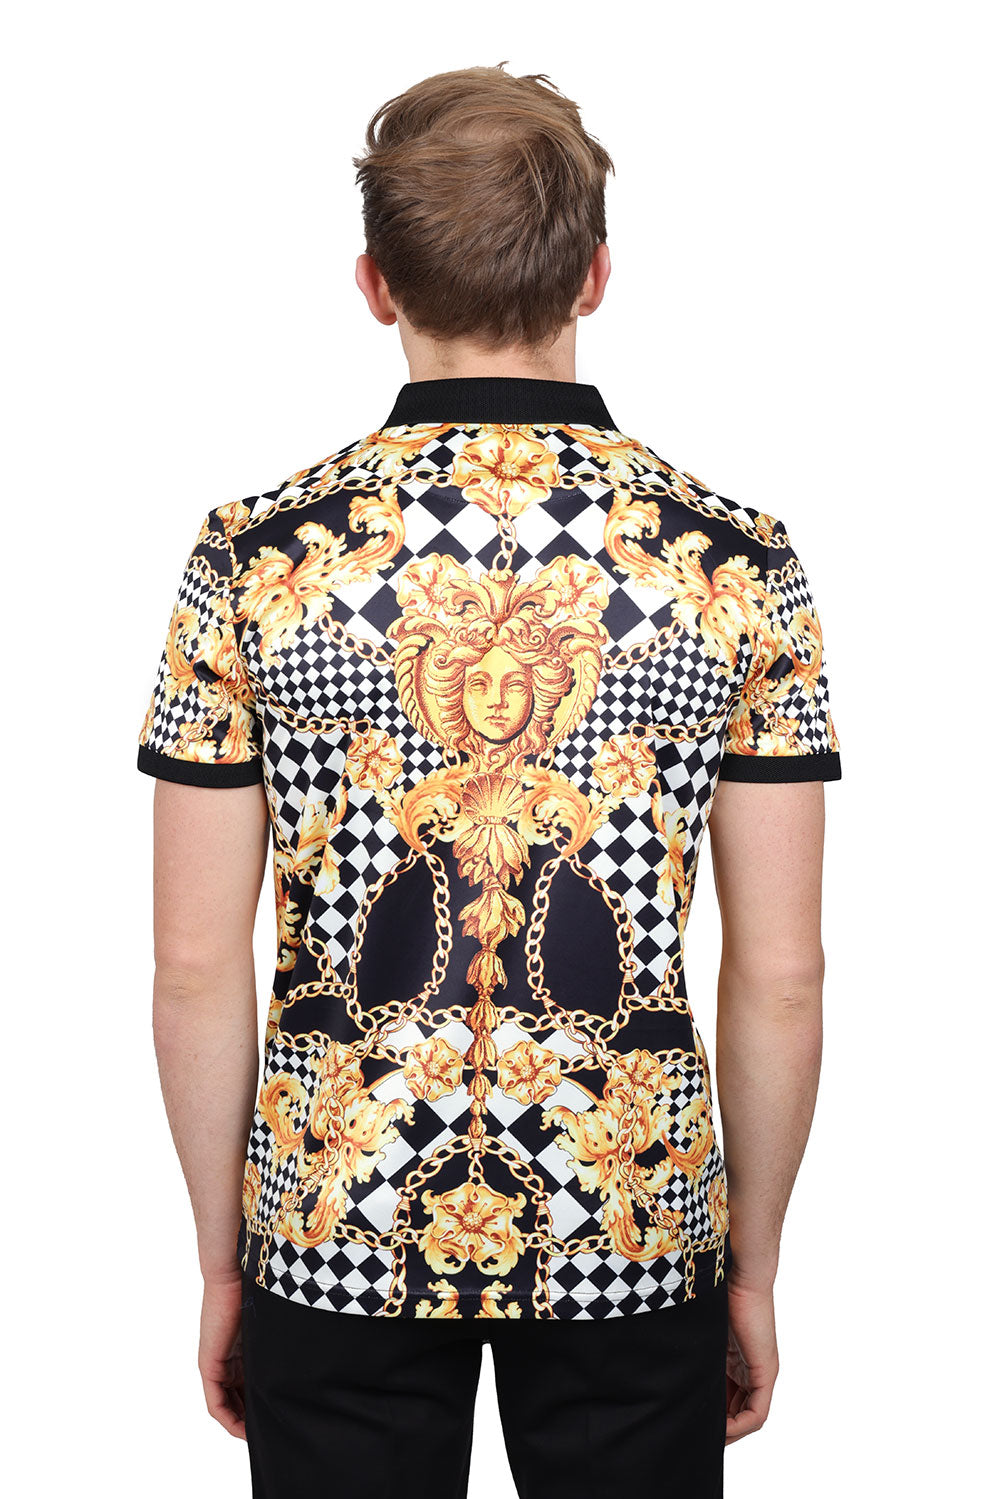 Barabas Men's Medusa Chain Checkered Floral Baroque Polo Shirt PSP2037 Gold